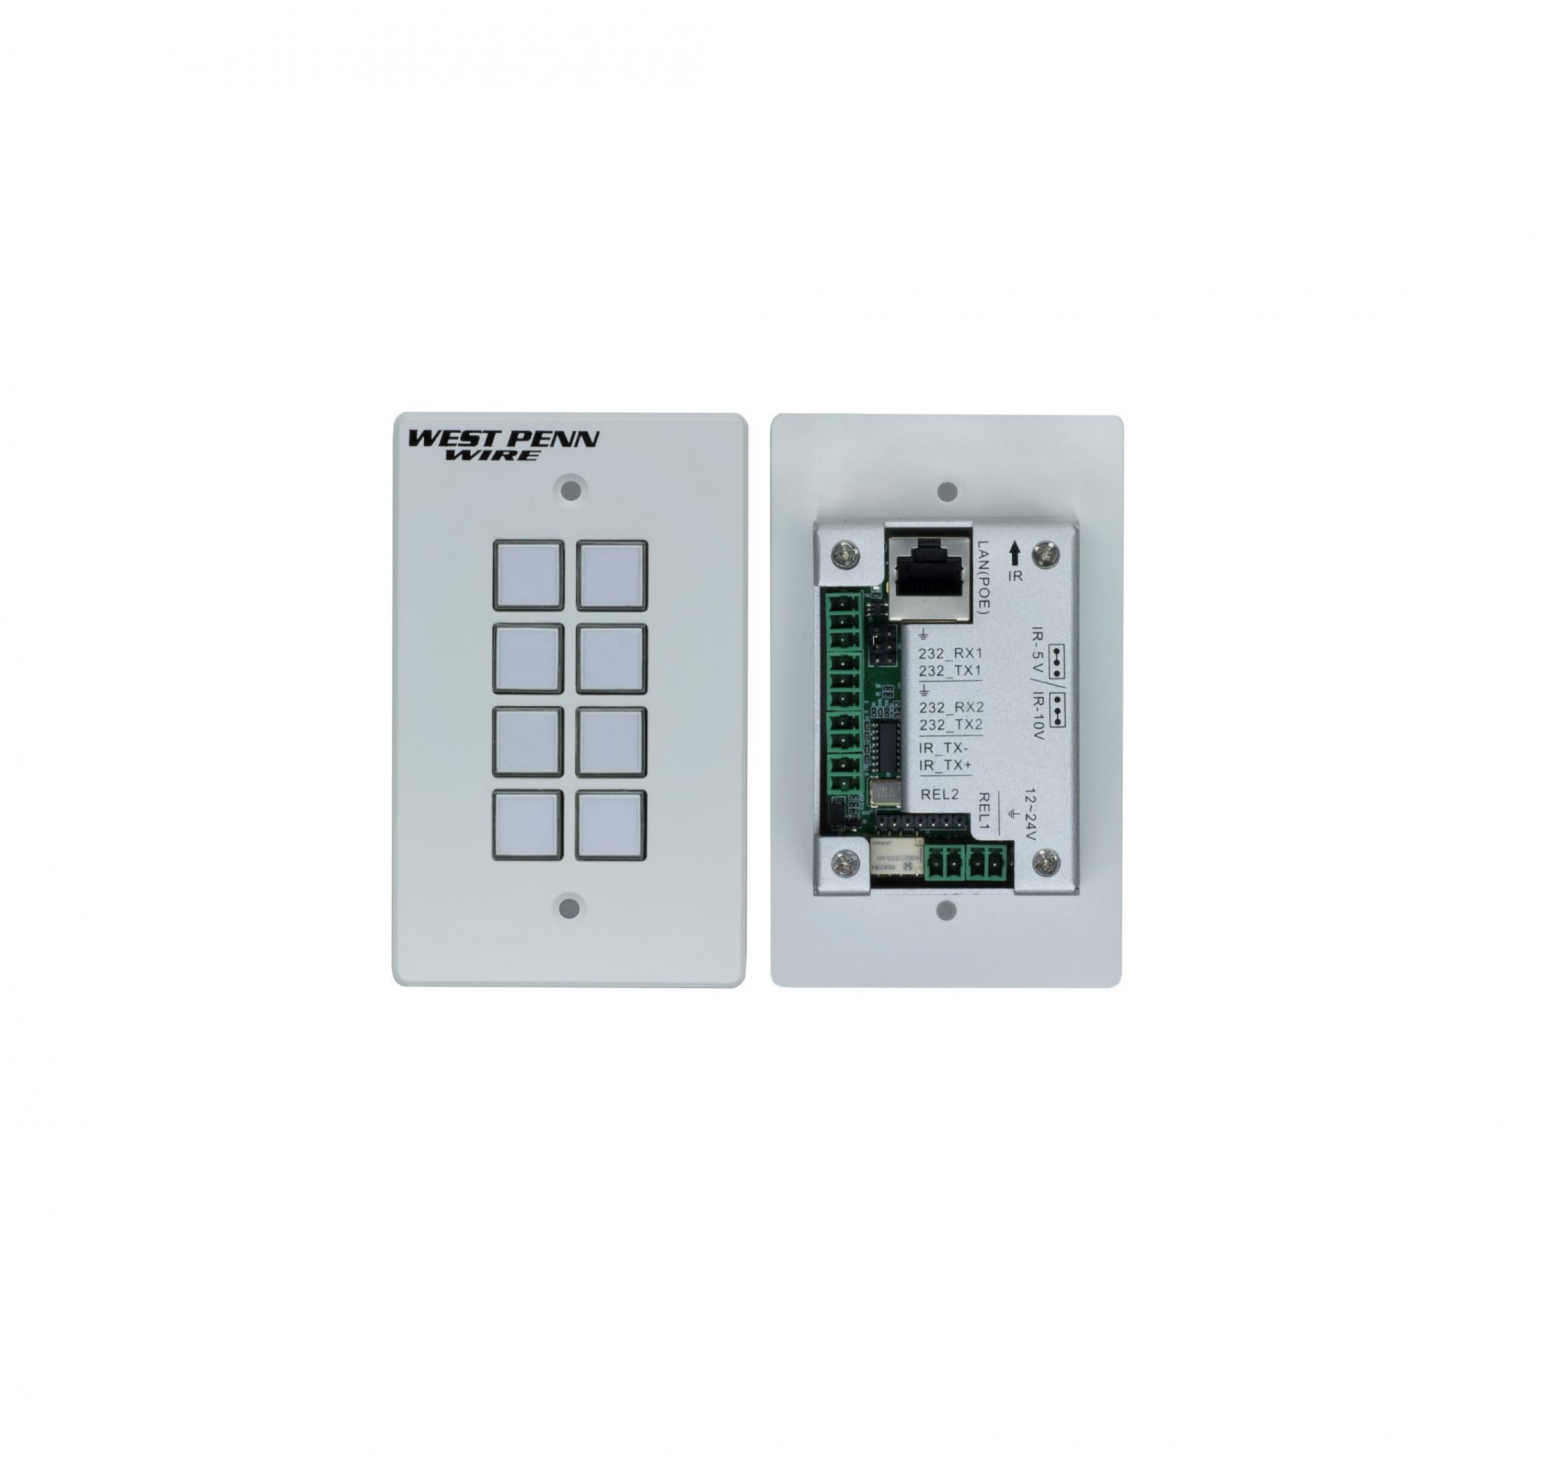 WEST PENN 8 Button IP Controller Installation Guide